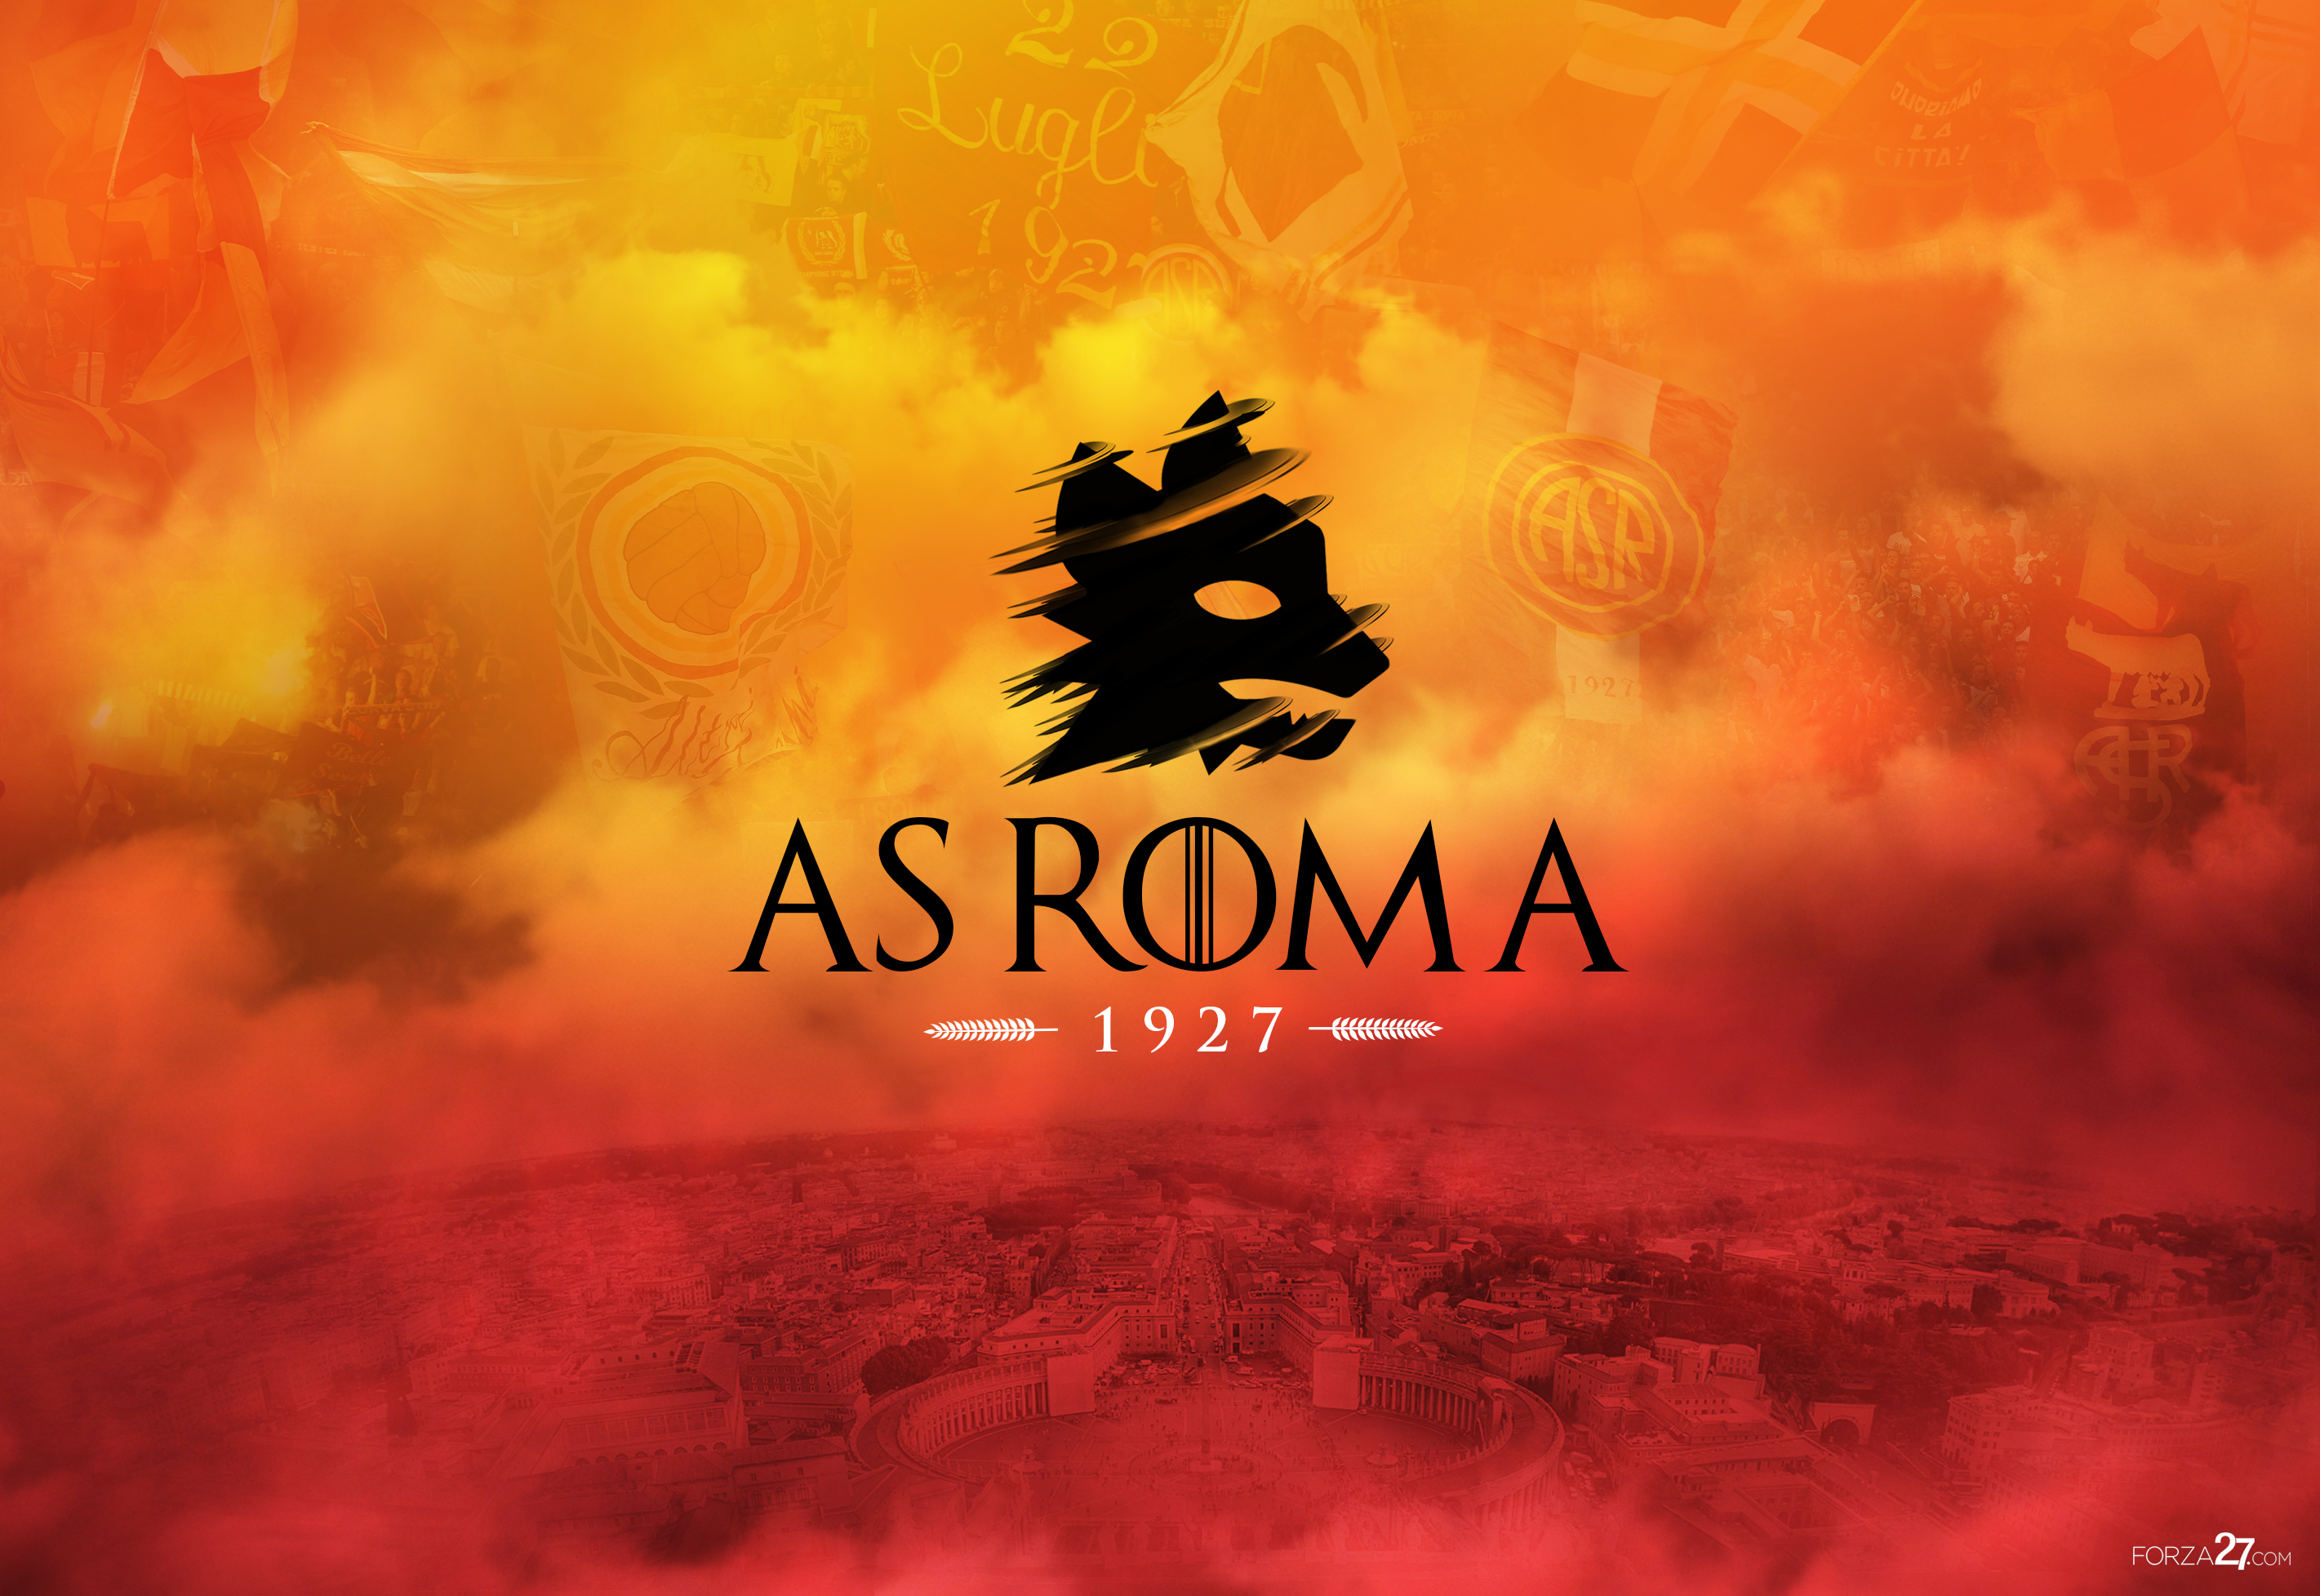 Pin by Ed Moynihan on C’e Solo l’ A.S. Roma | As roma, Football